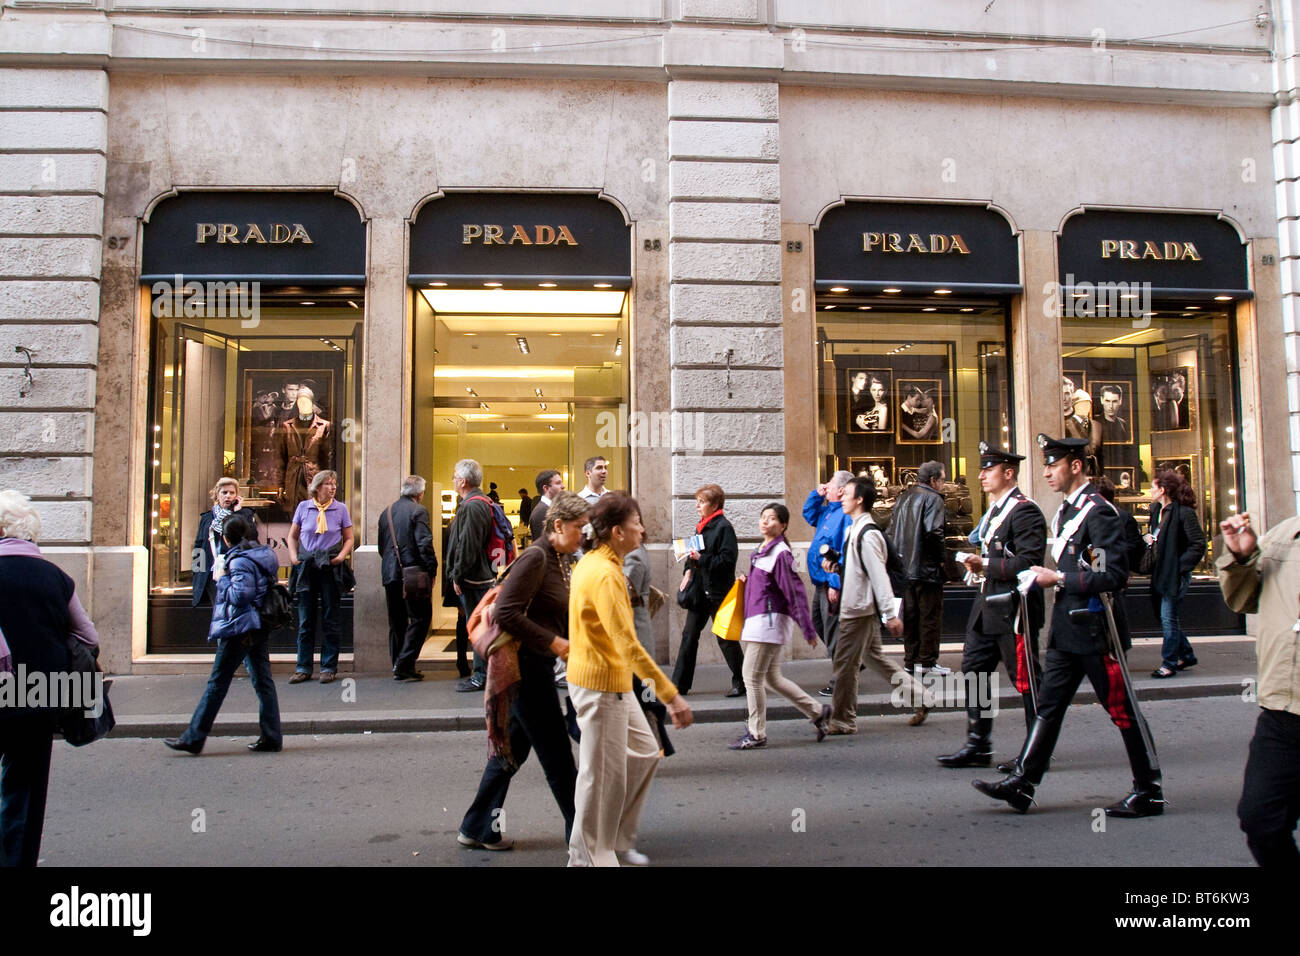 Via dei Condotti, Prada fashion store windows on background. Rome Stock  Photo - Alamy